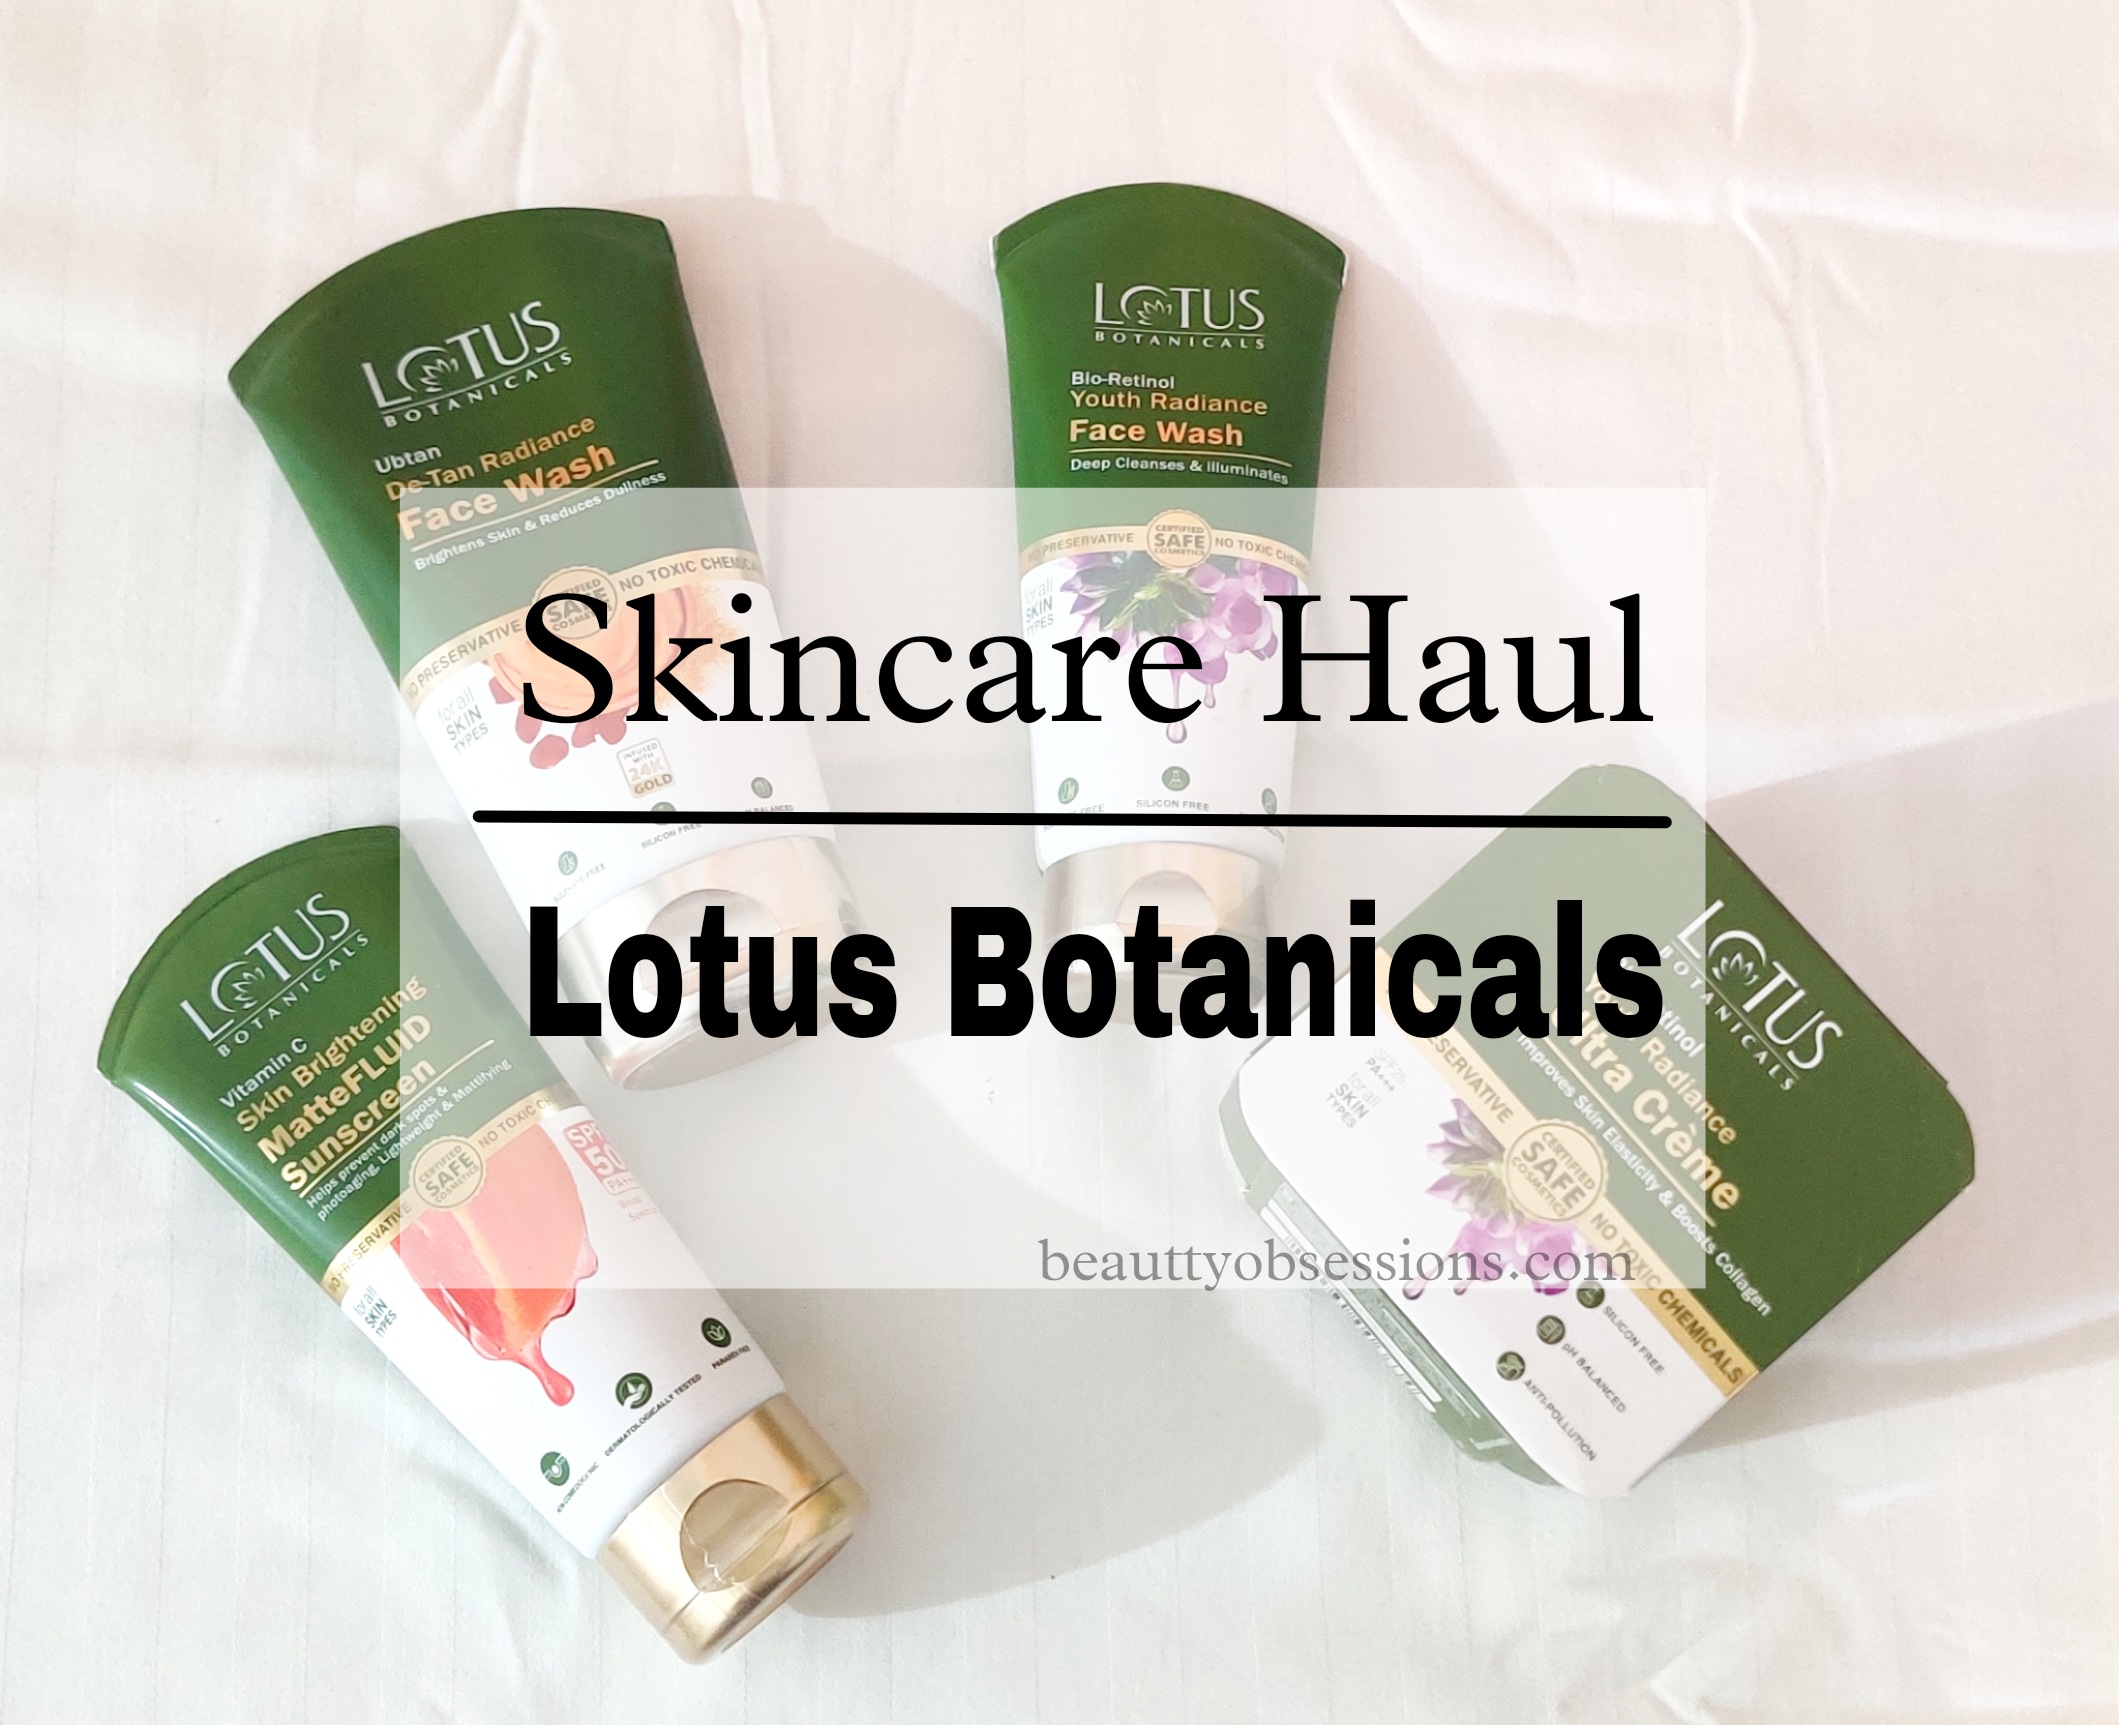 Skincare Haul from Botanicals